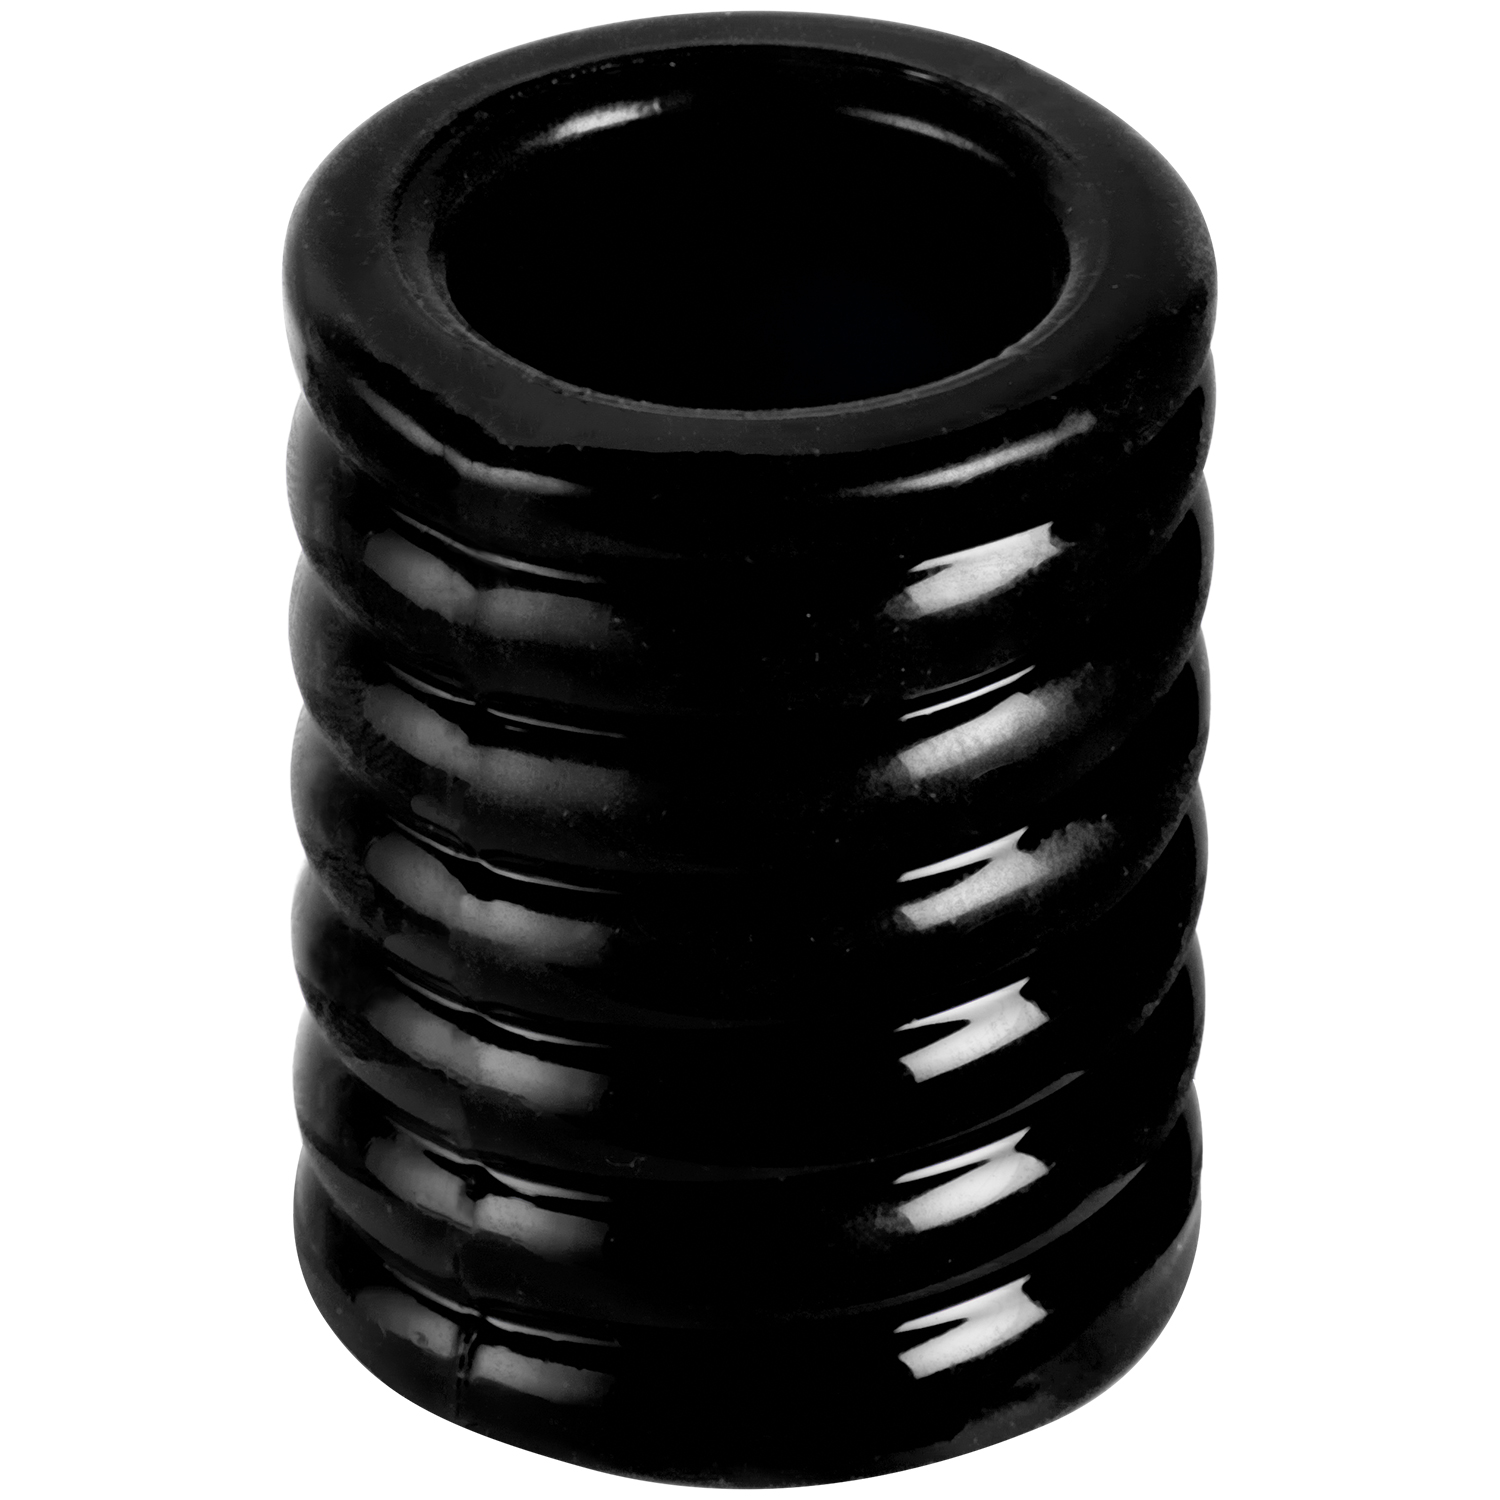 TitanMen Stretch Cock Cage Penis Ring - Black